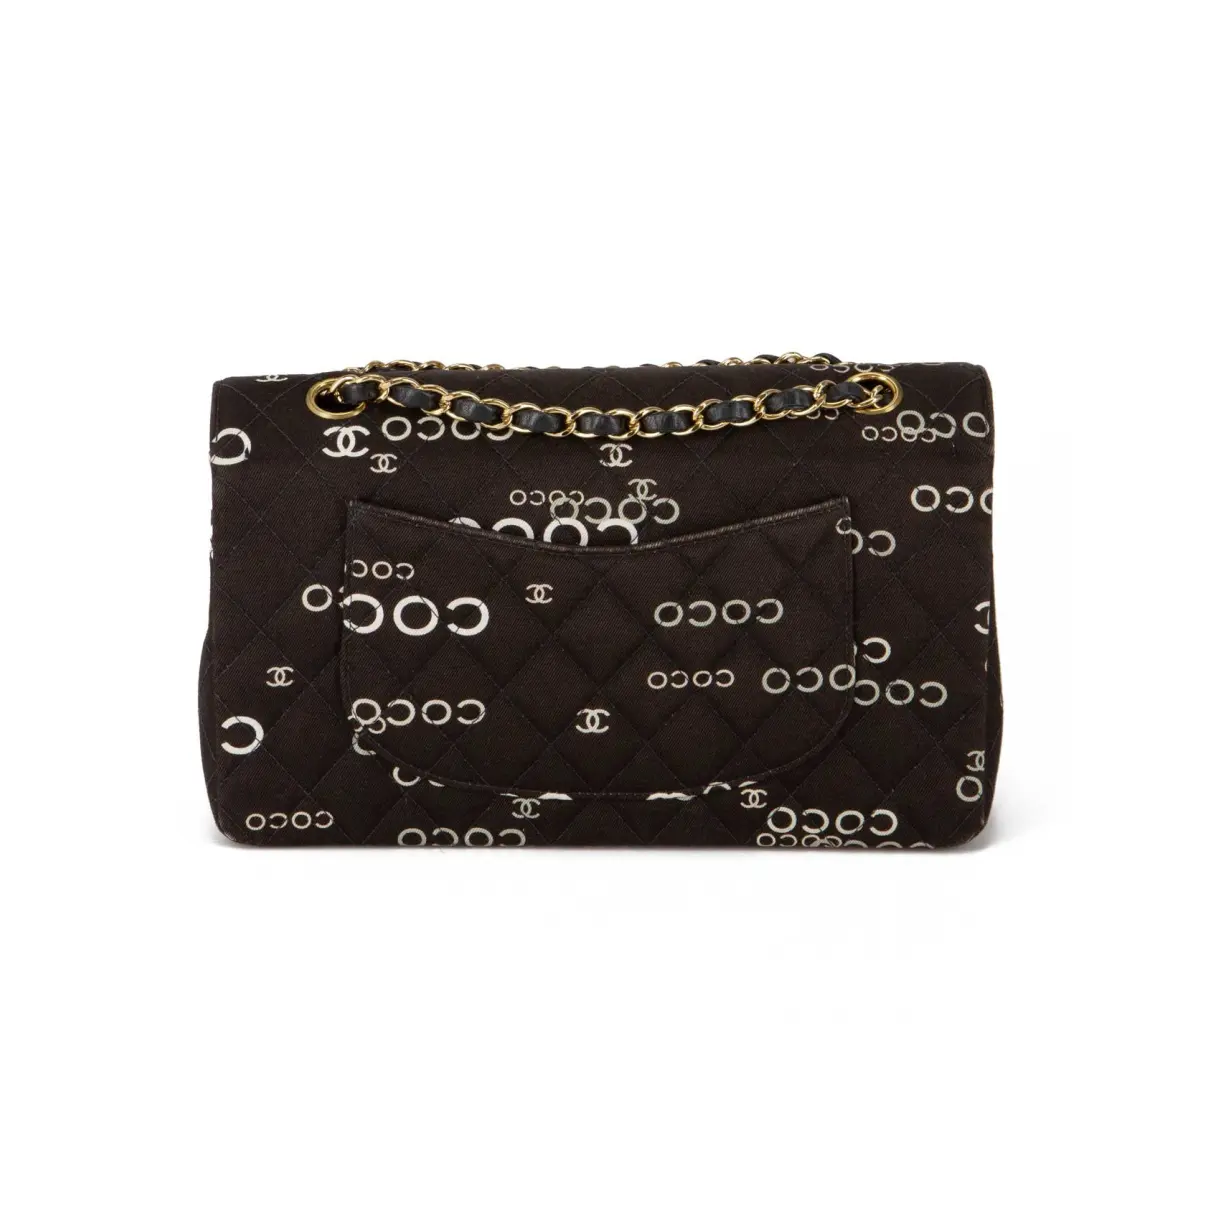 Buy Chanel Timeless/Classique handbag online